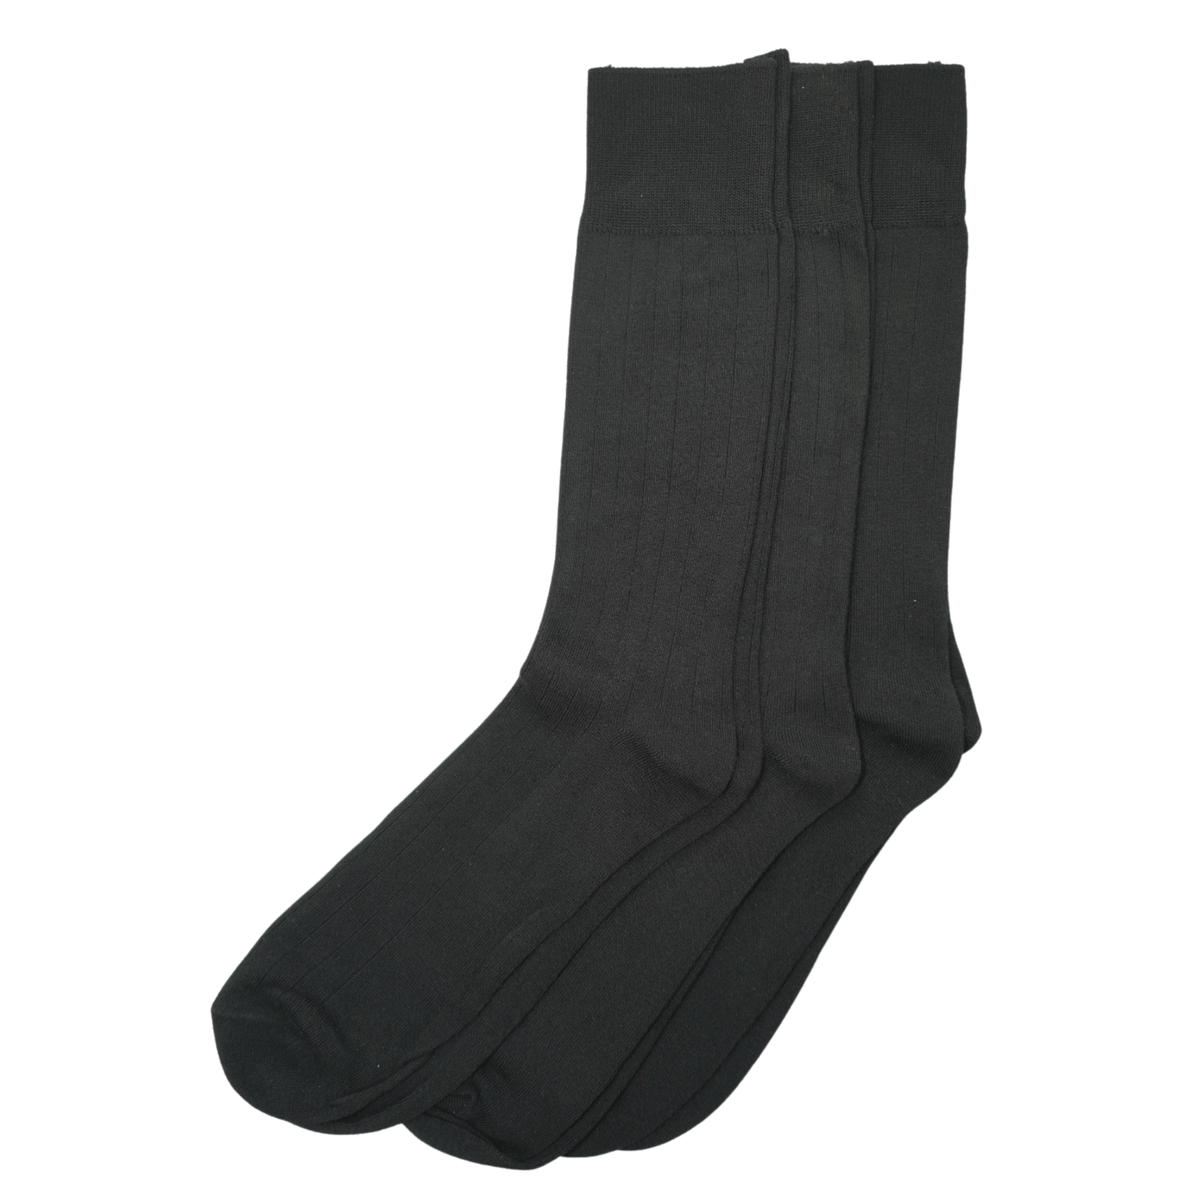 Ike Behar ACCESSORIES Ike Behar Mens Solid Black 3 Pack Bamboo Socks